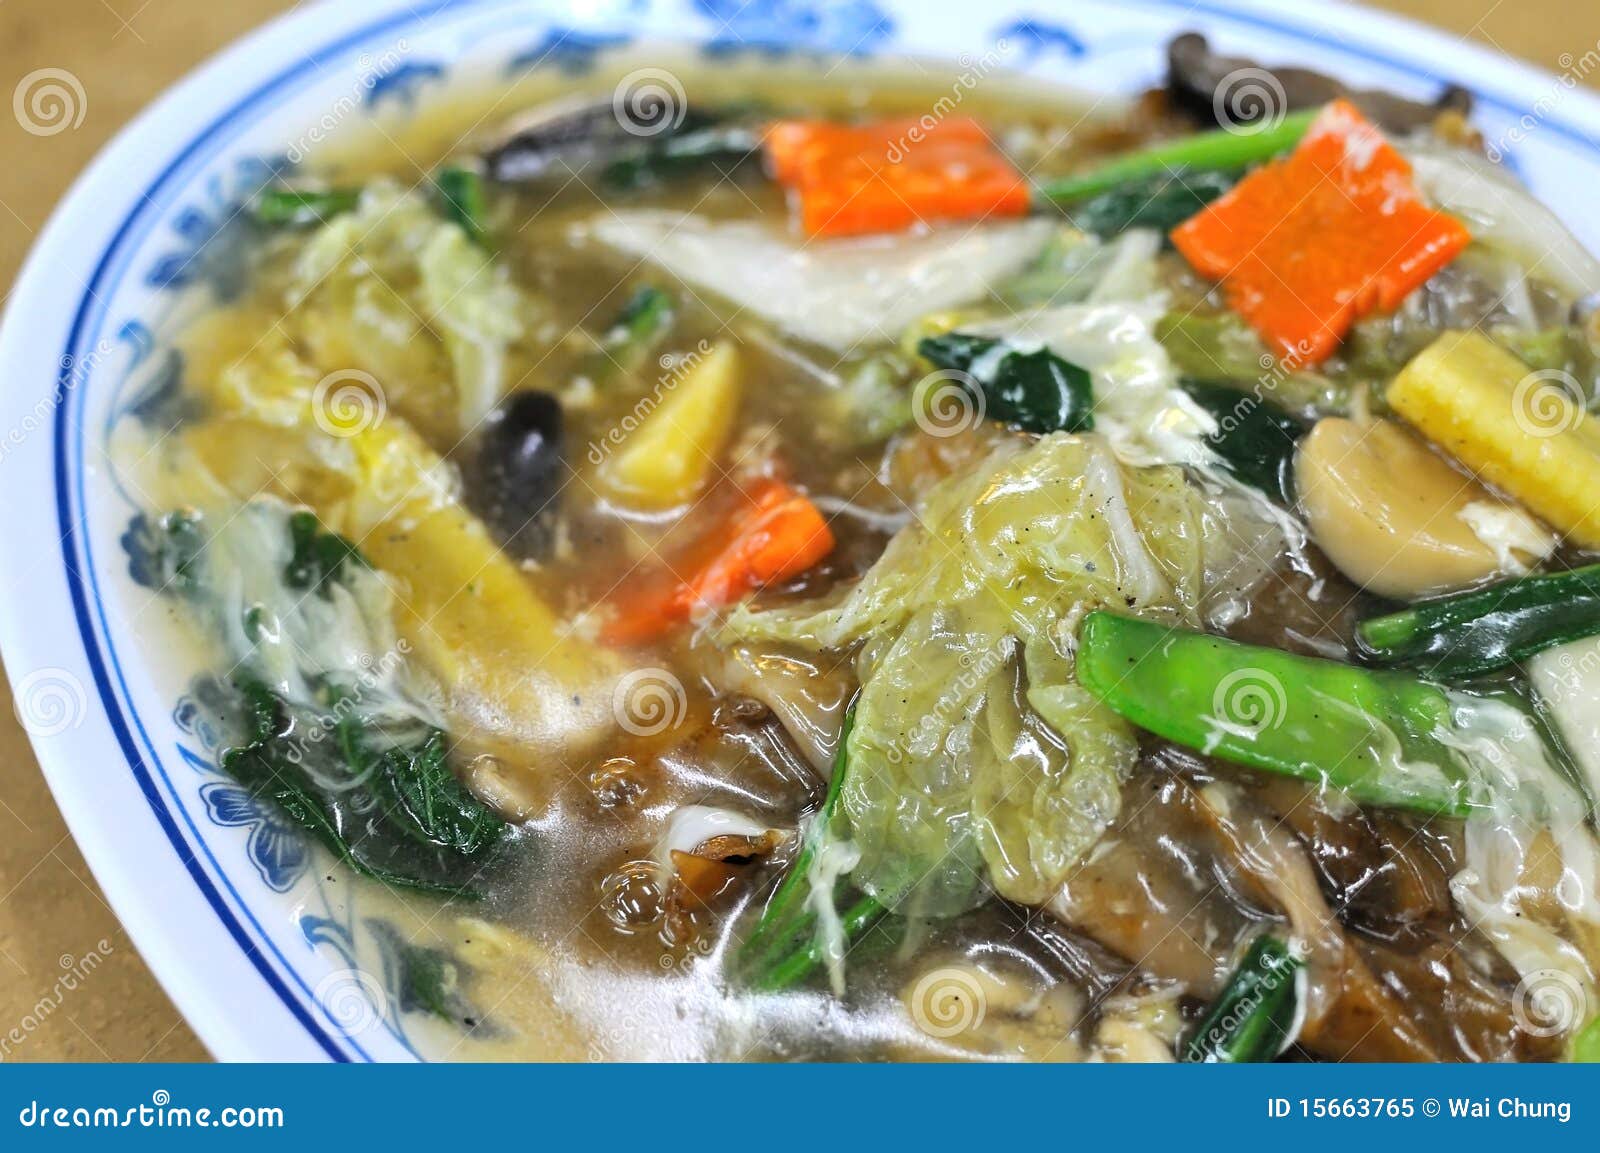 vegetarian kway teow cuisine